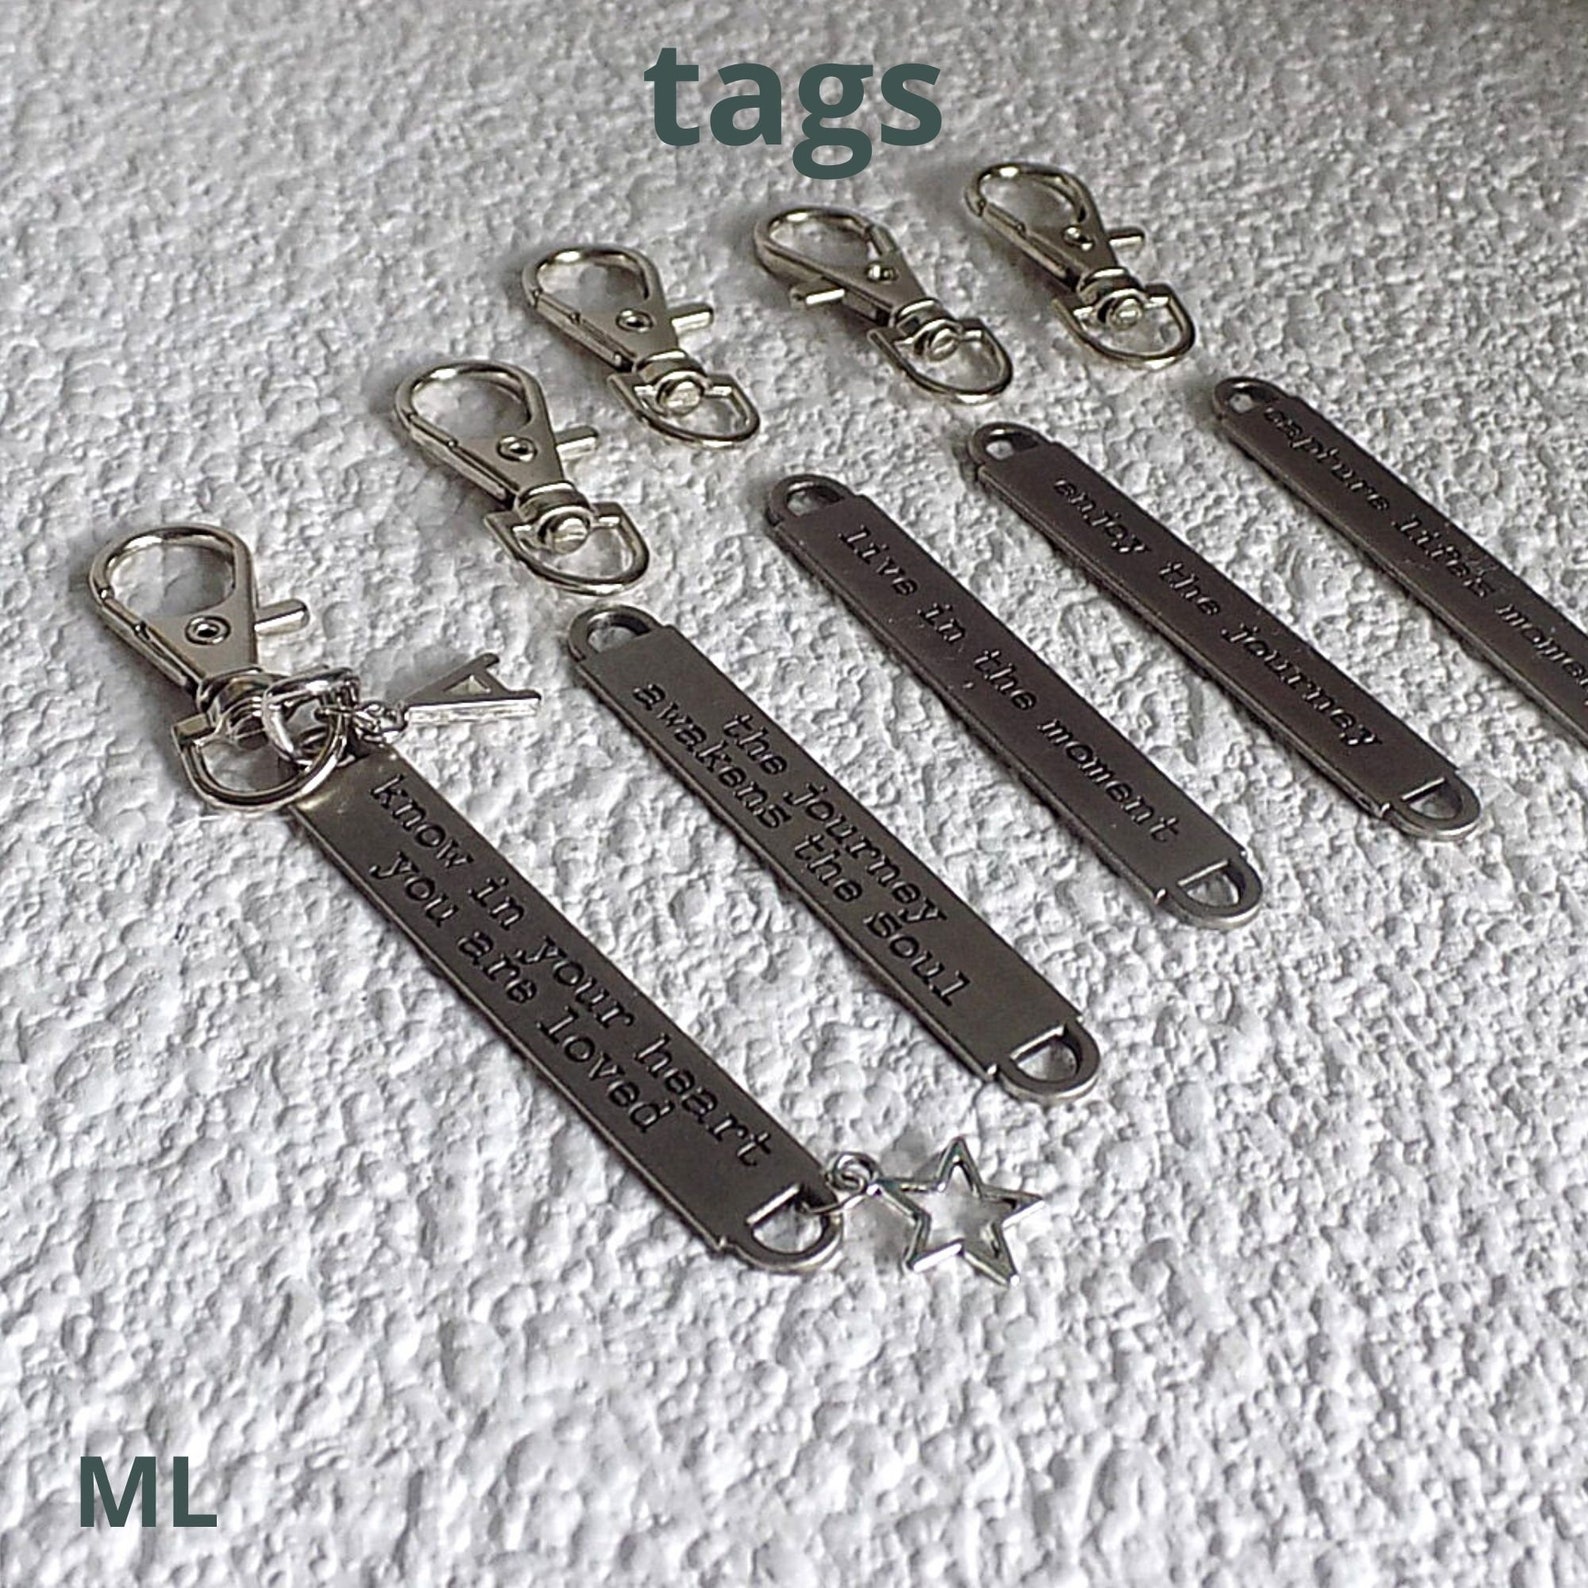 Engraved Tag Bag/ Backpack Key Ring | Etsy